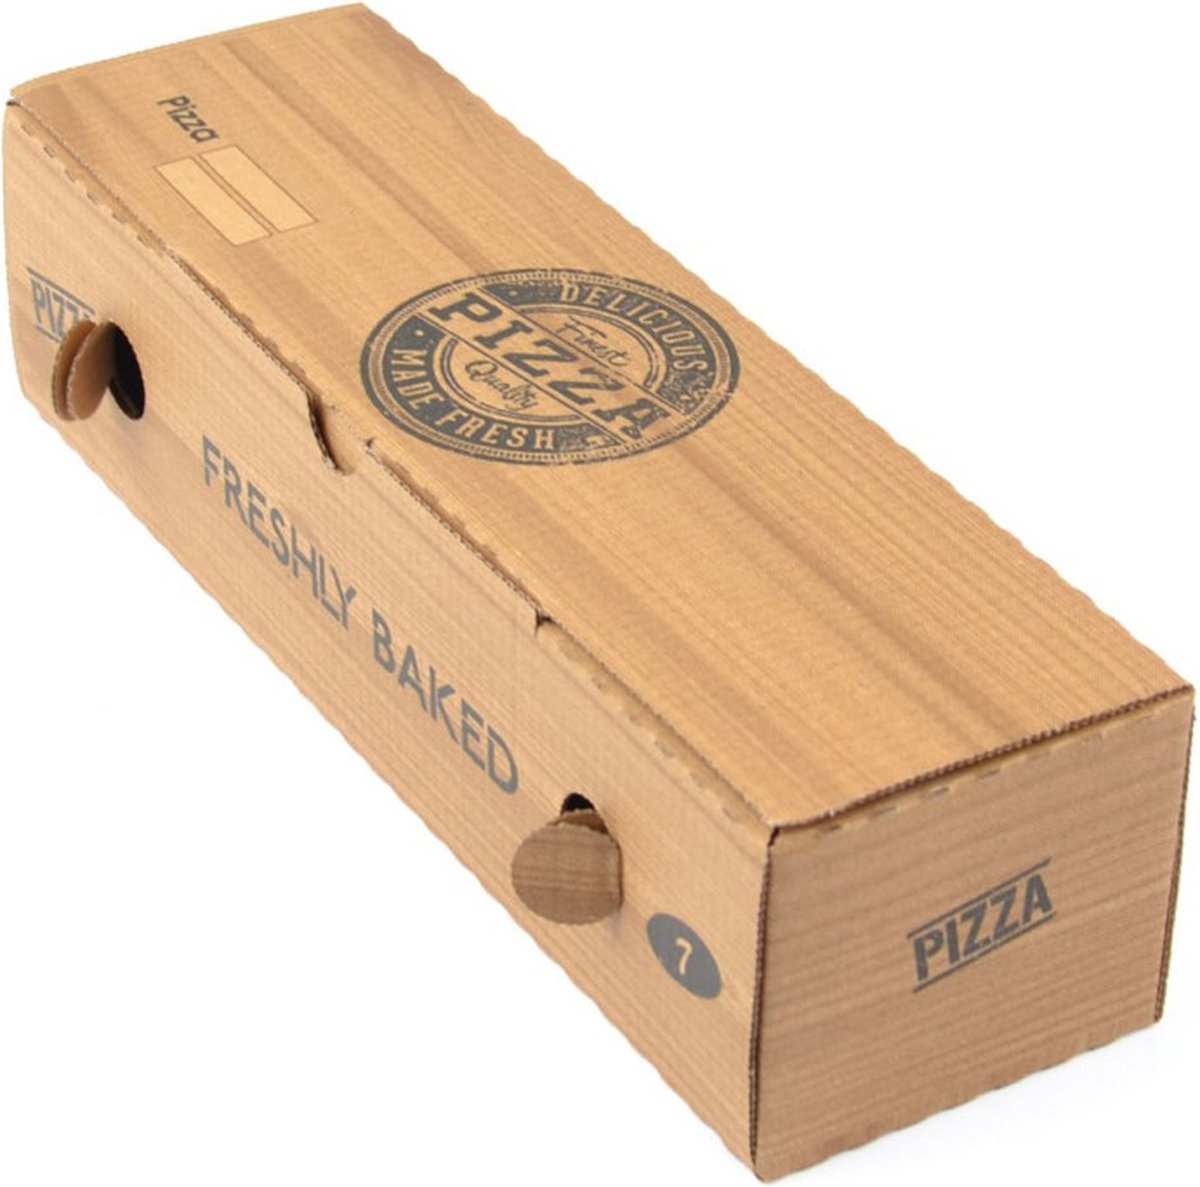 Wrap box - Lunchbox - 28x8x7 cm - 100 stuks - Kartonnen box - Wraps - Ideaal voor wraps/durum - Kartonnen lunchbox - Verpakking - Lunch - Wegwerp - recycled products - Merkloos